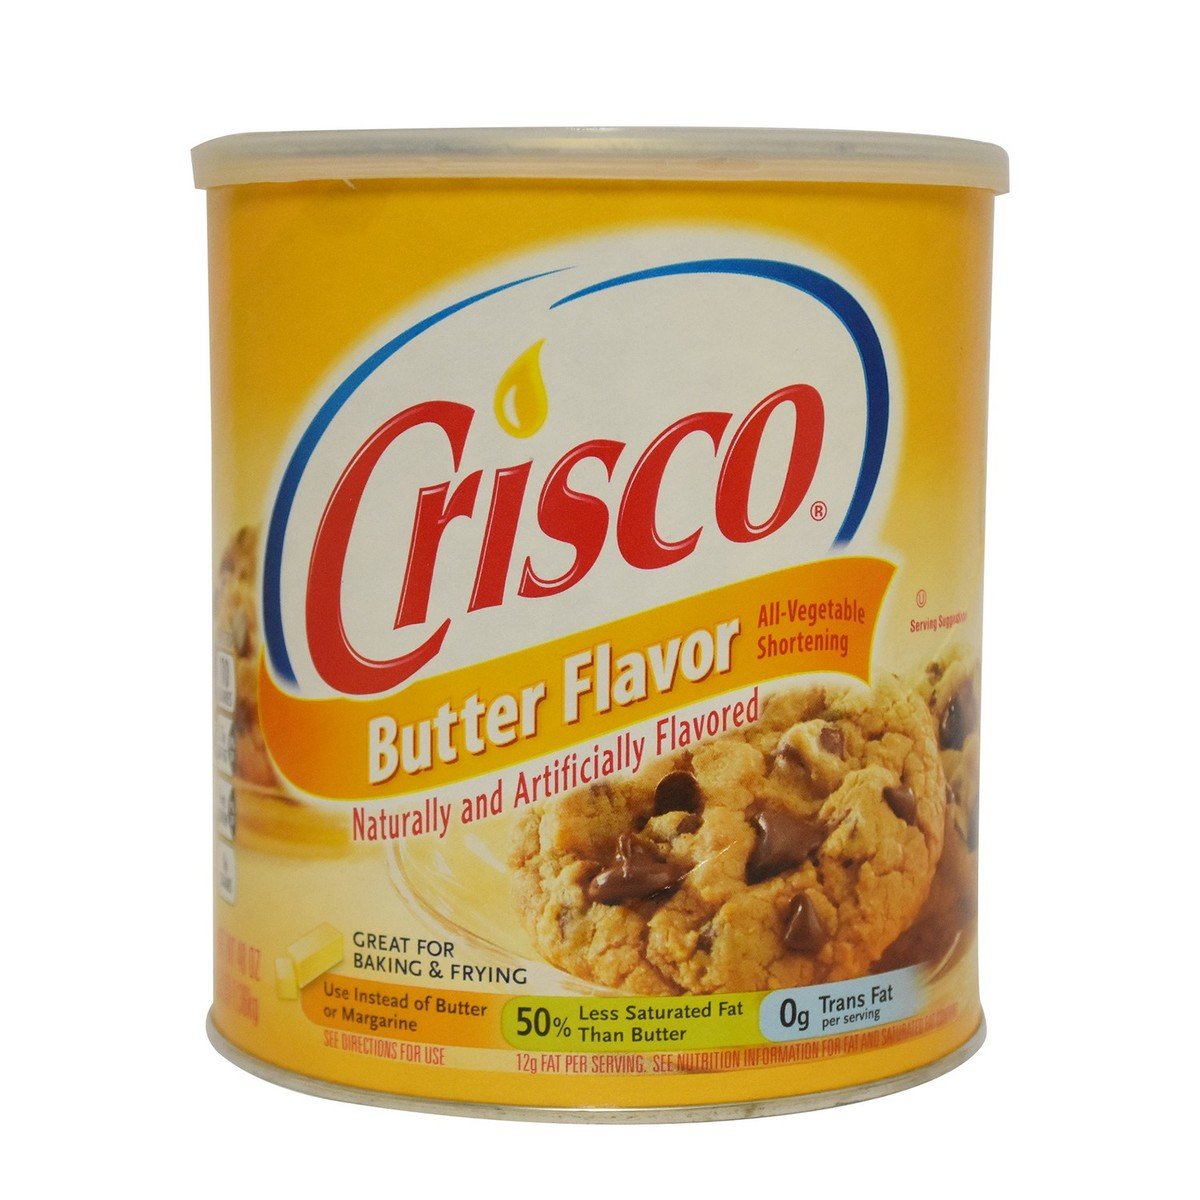 Crisco Butter Flavored All Vegetable Shortening 1.36 kg